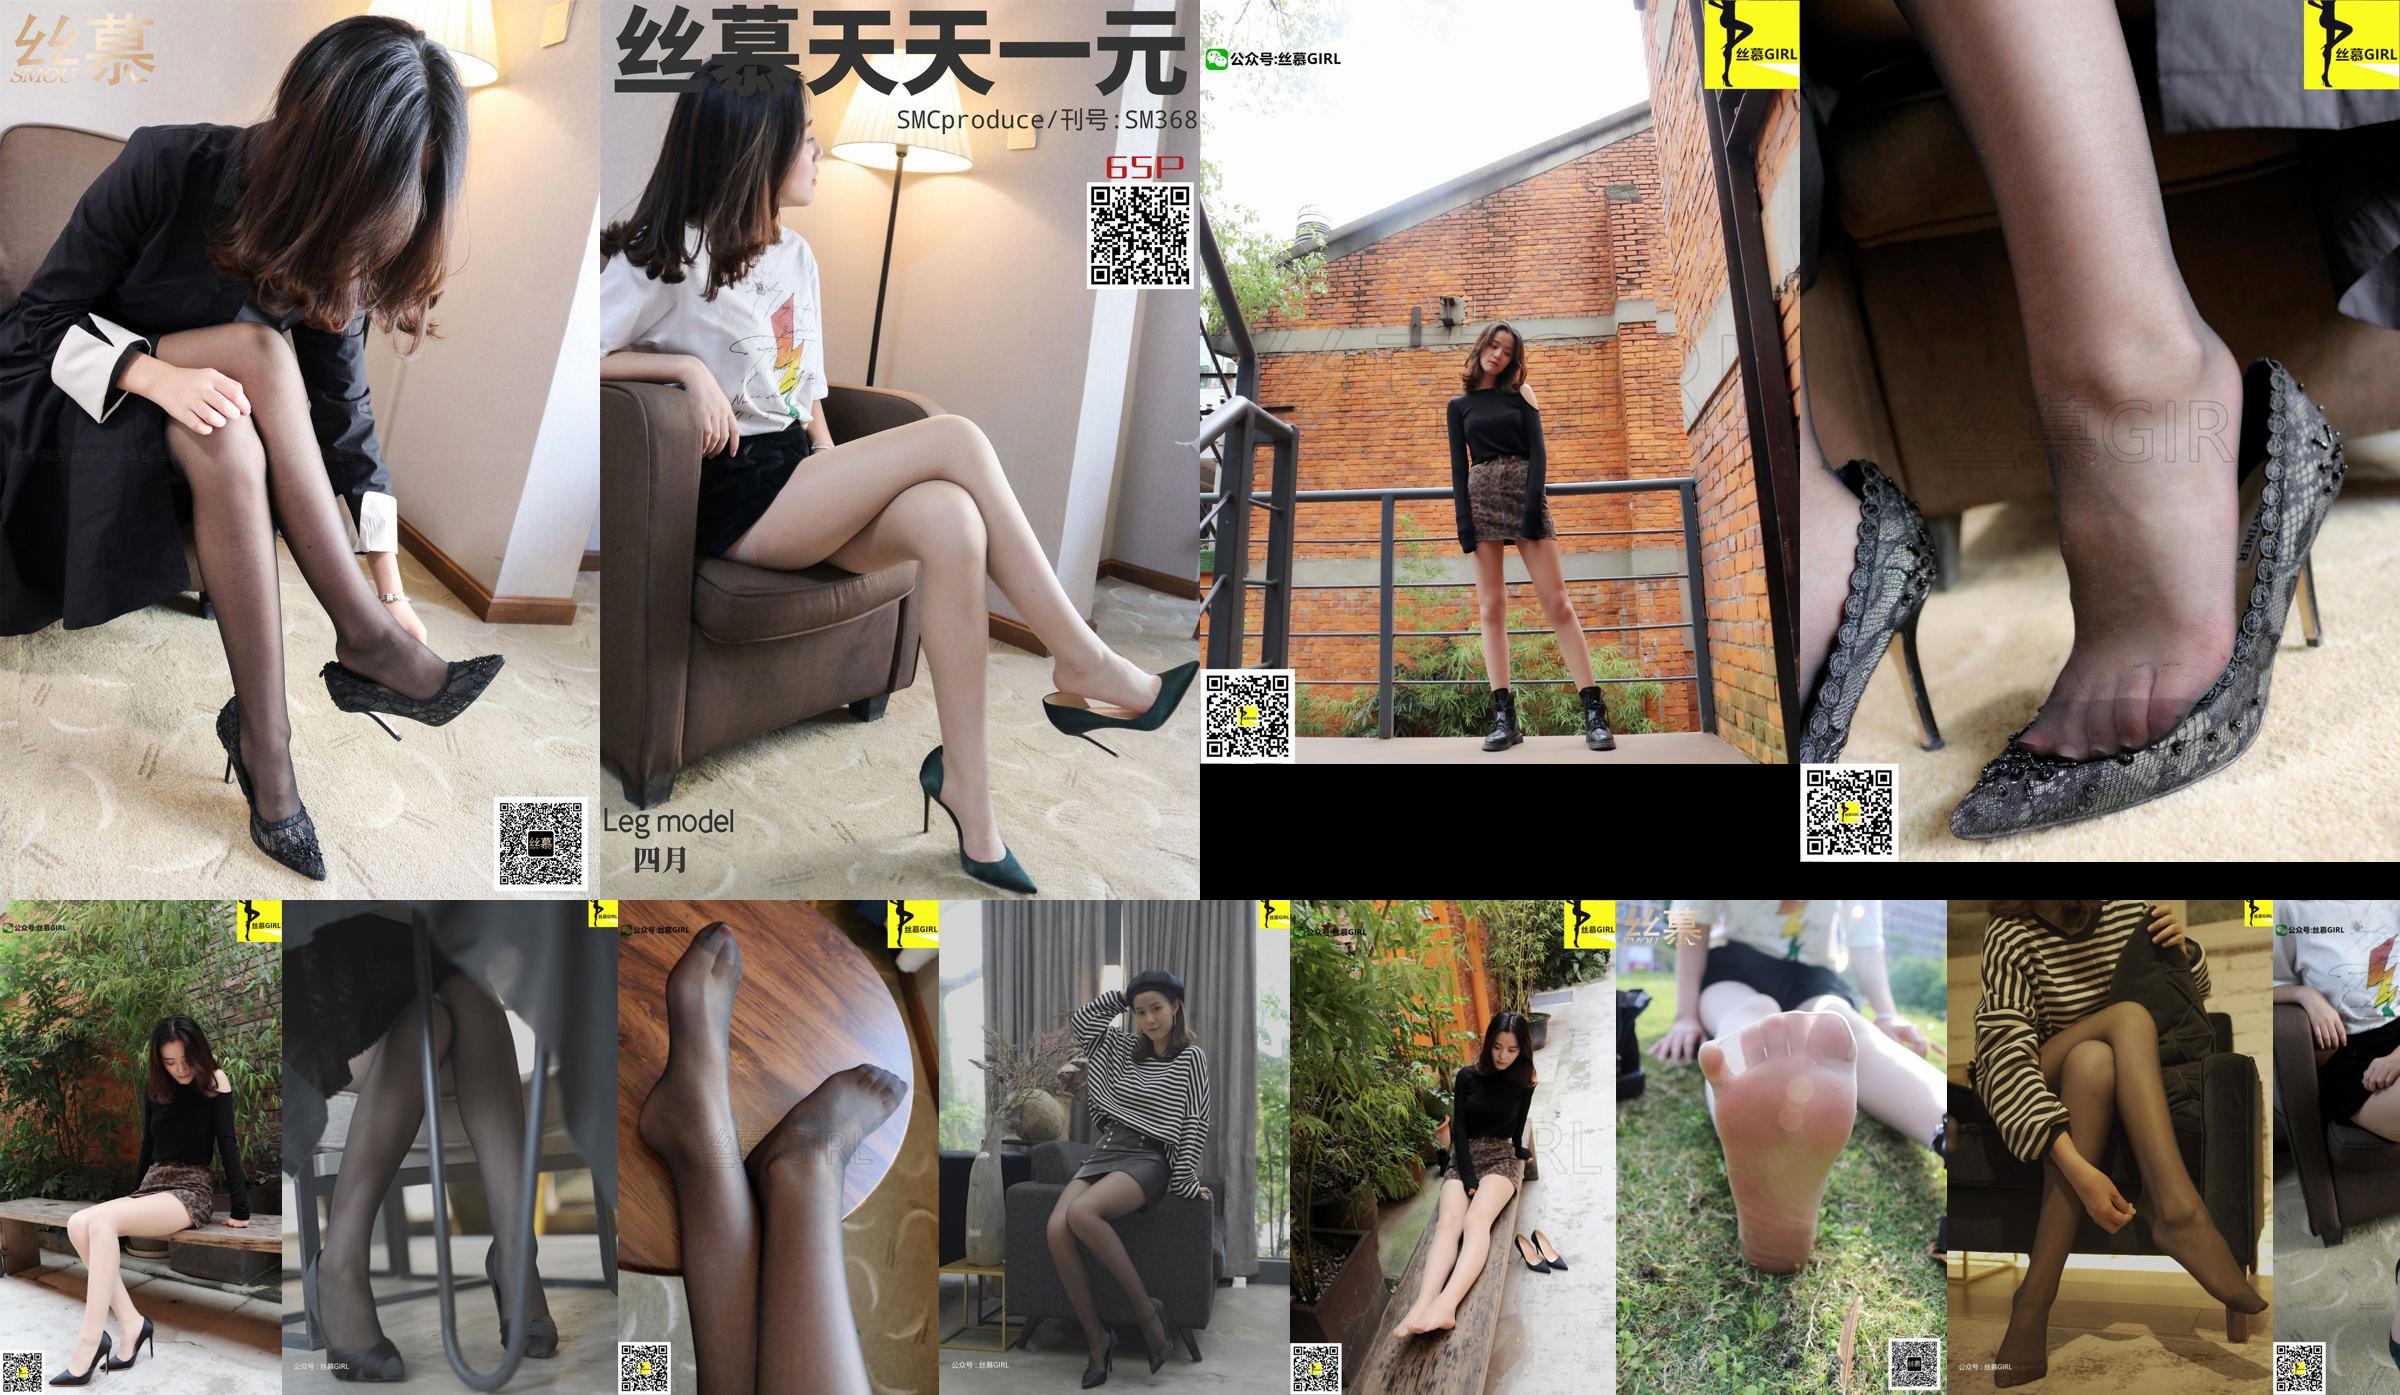 [Simu] SM368 Every Day One Yuan April "Double Silk Review" No.2e34e6 Page 1